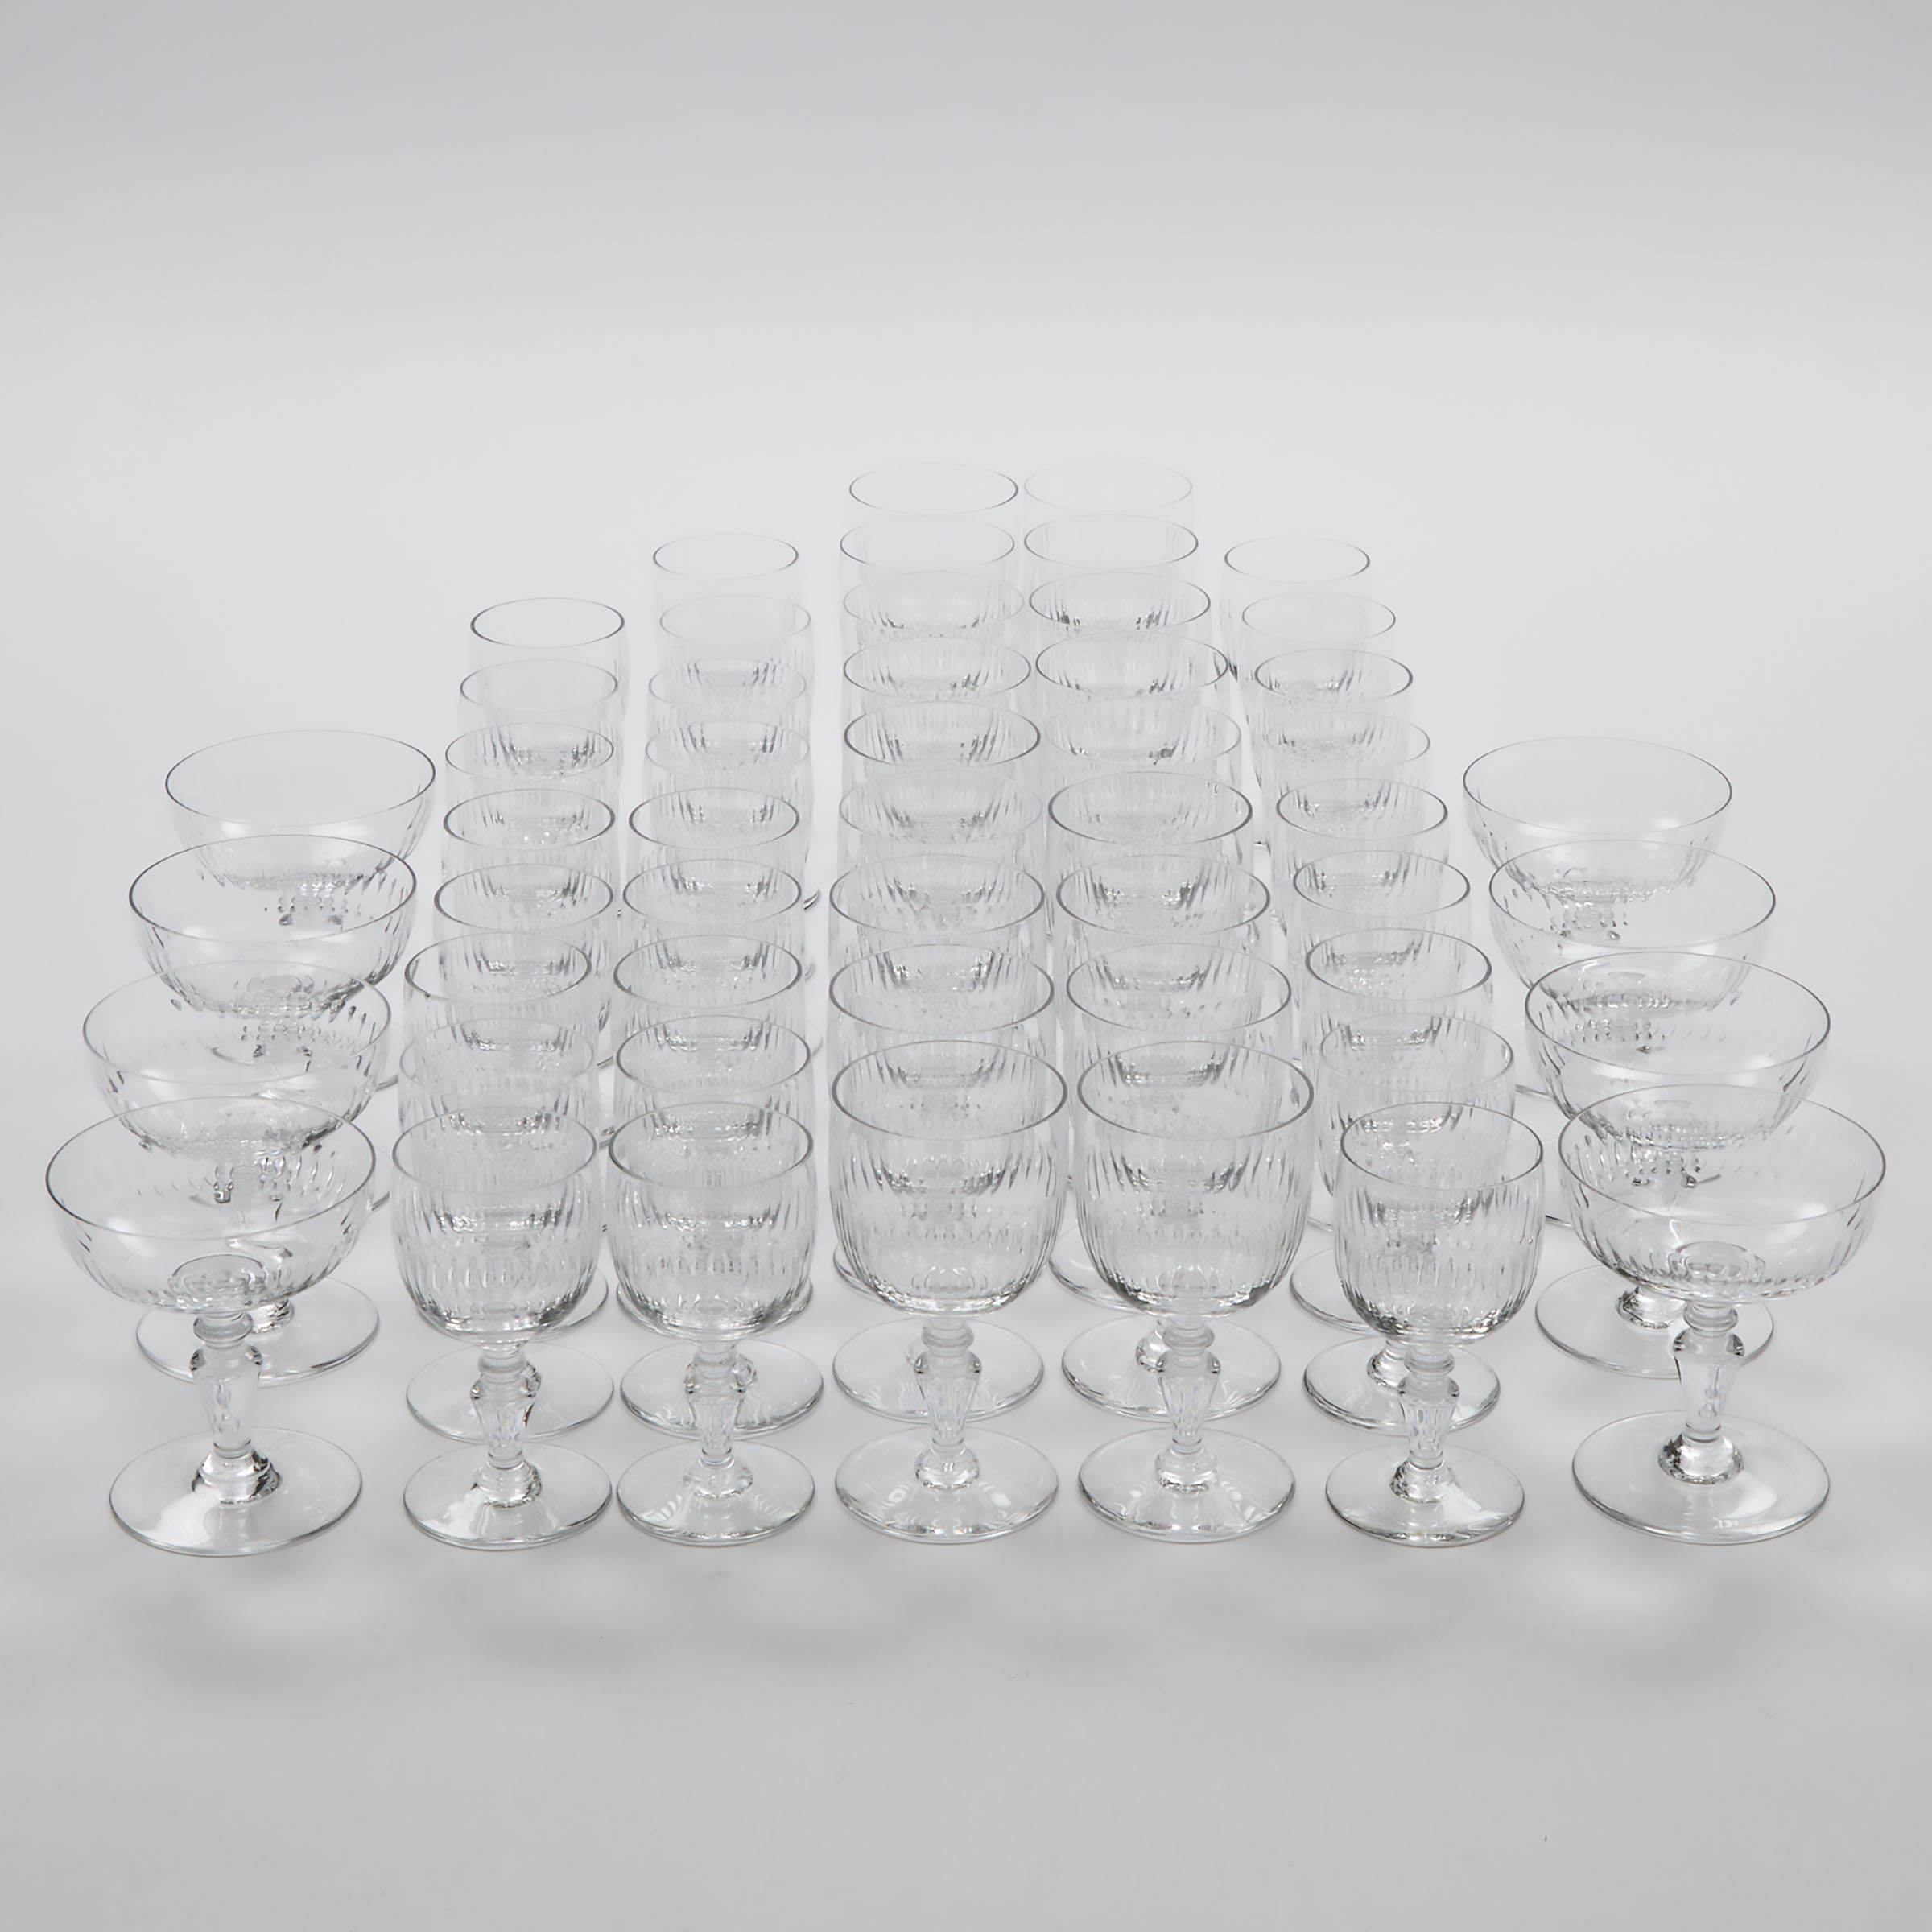 Baccarat 'Renaissance' Pattern Cut Glass Stemware, 20th century